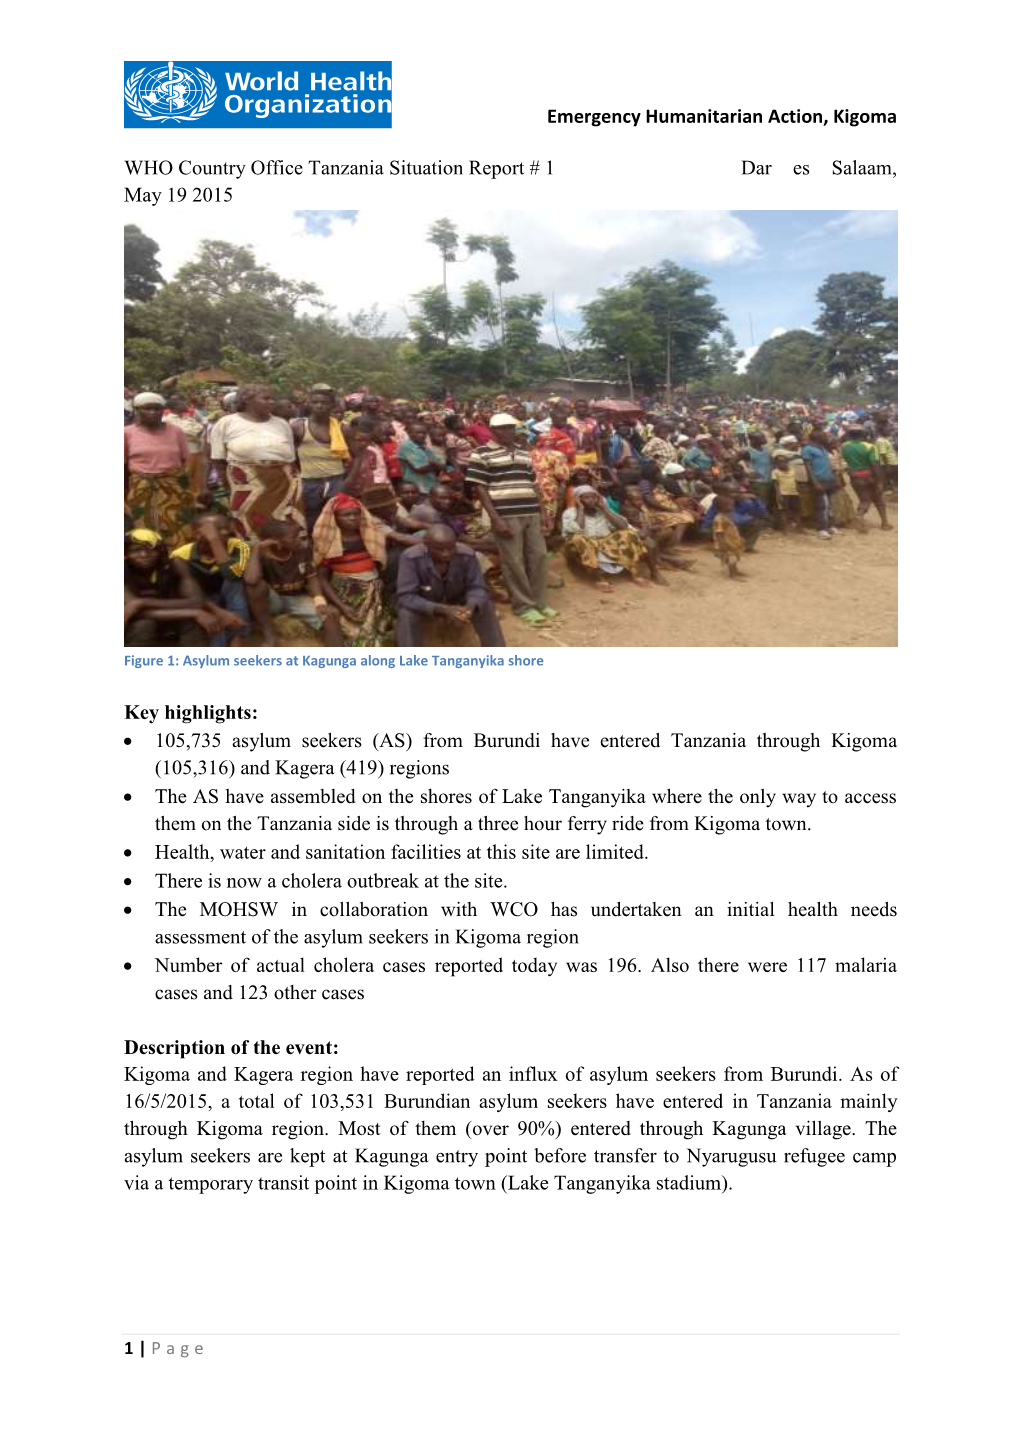 Emergency Humanitarian Action, Kigoma WHO Country Office Tanzania Situation Report # 1 Dar Es Salaam, May 19 2015 Key Highlight